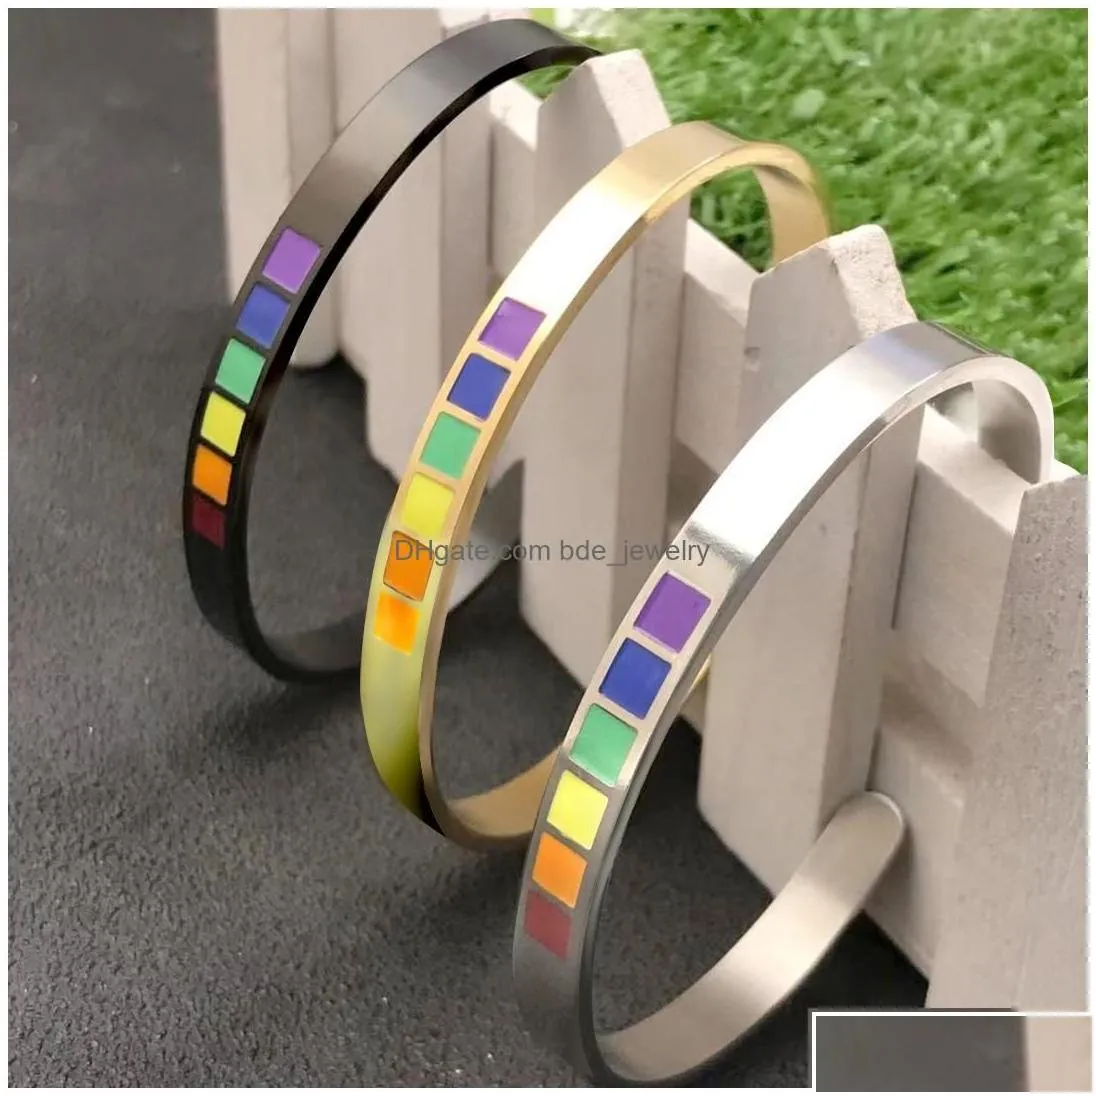 Bangle 6Mm Rainbow Color Cuff Bracelets For Men Women Jewelry Stainless Steel Lesbian Gay Pride Metal Bracelet Pink Lgbt Stripe Gift